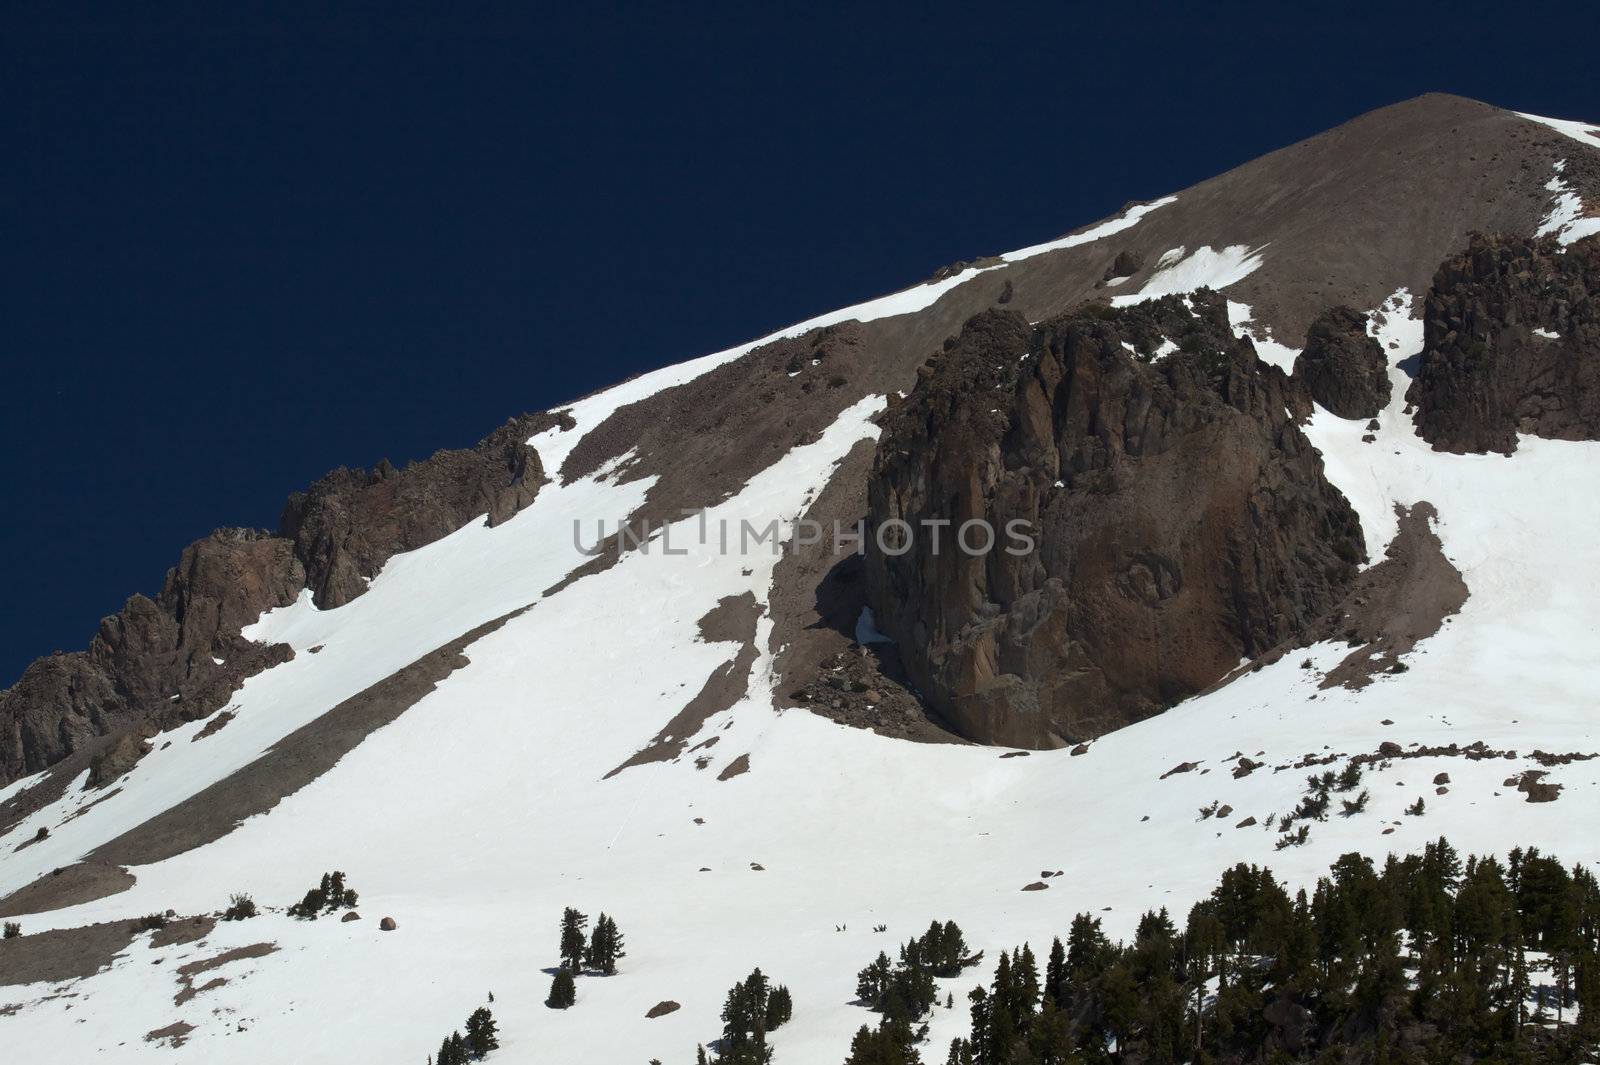 Granite mountain peak  with snow against deep blue sky